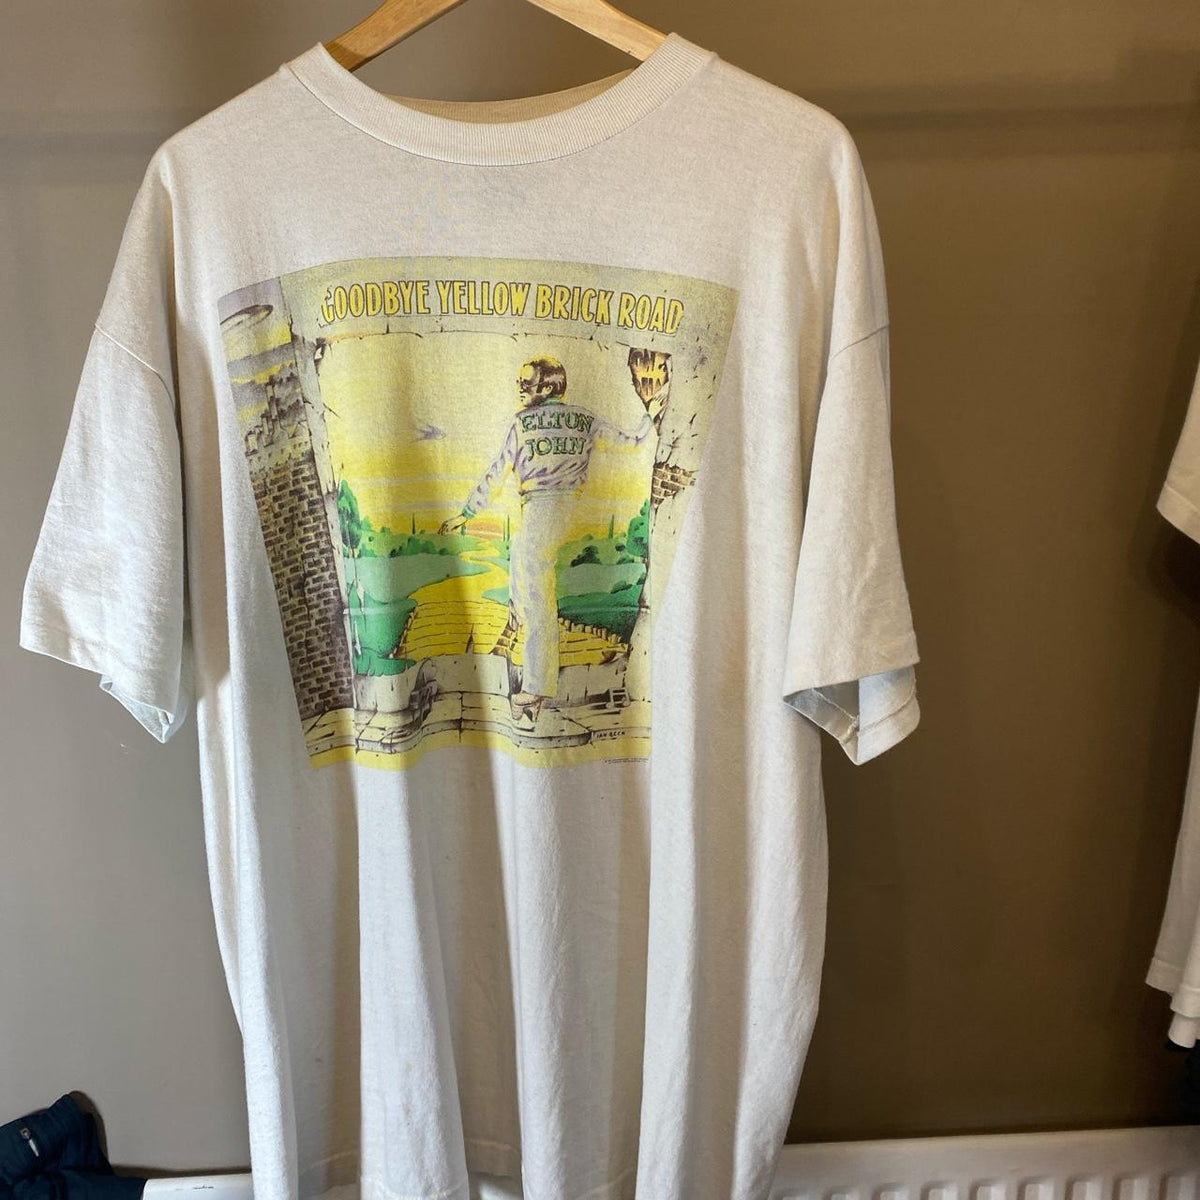 Elton John Official Goodbye Yellow Brick Road Cover T-Shirt